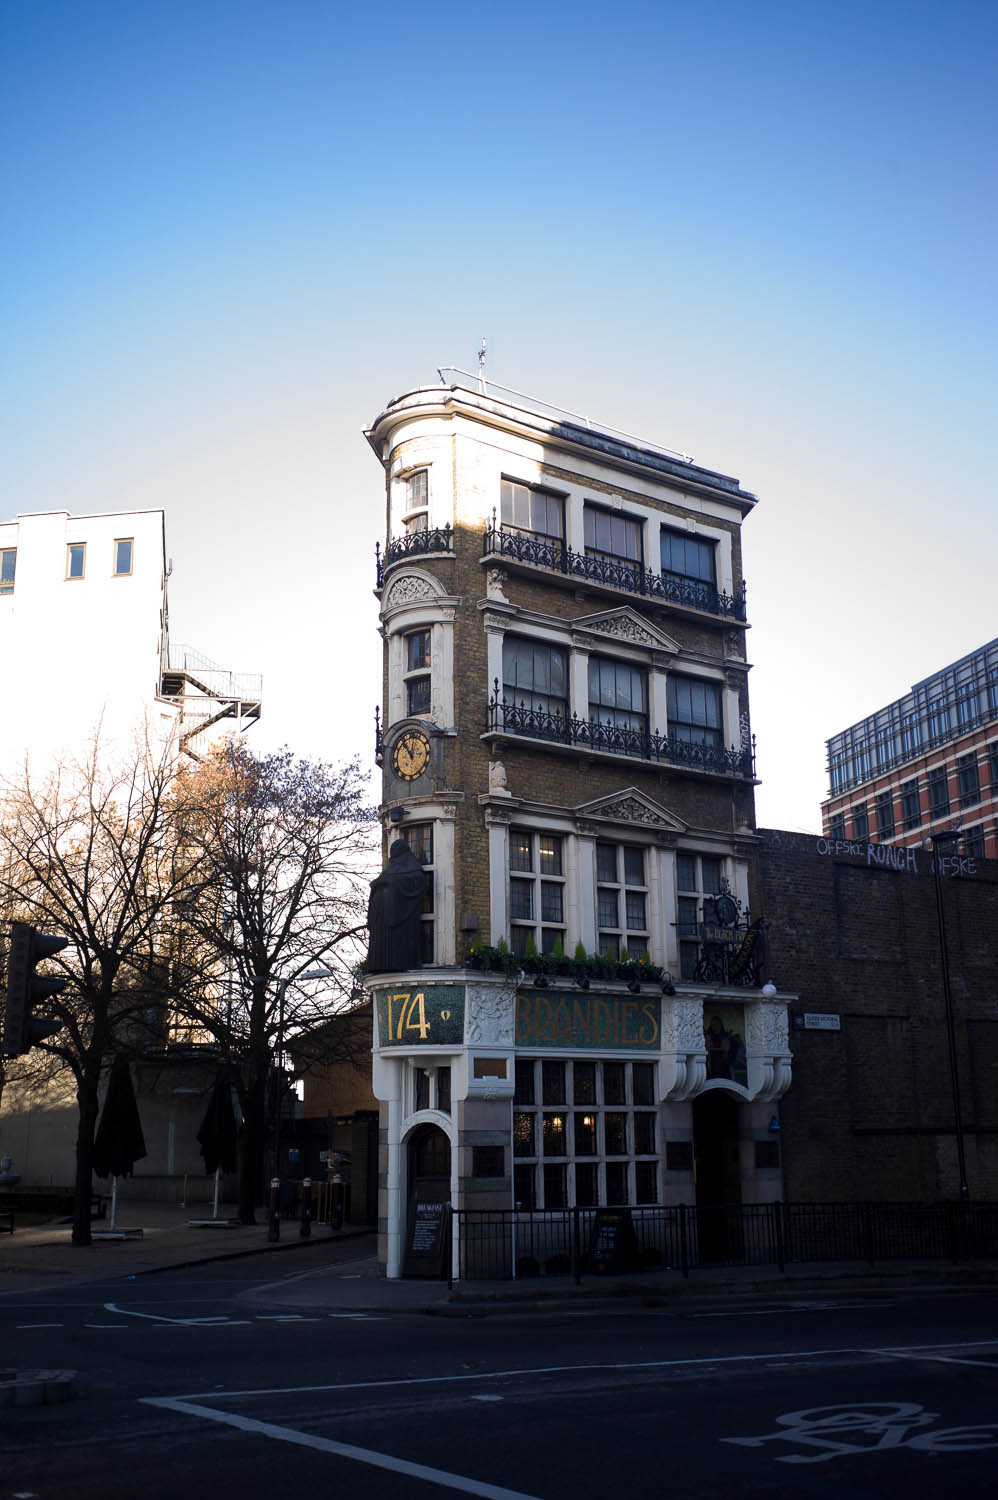 A narrow pub building near Blackfriars Station in London